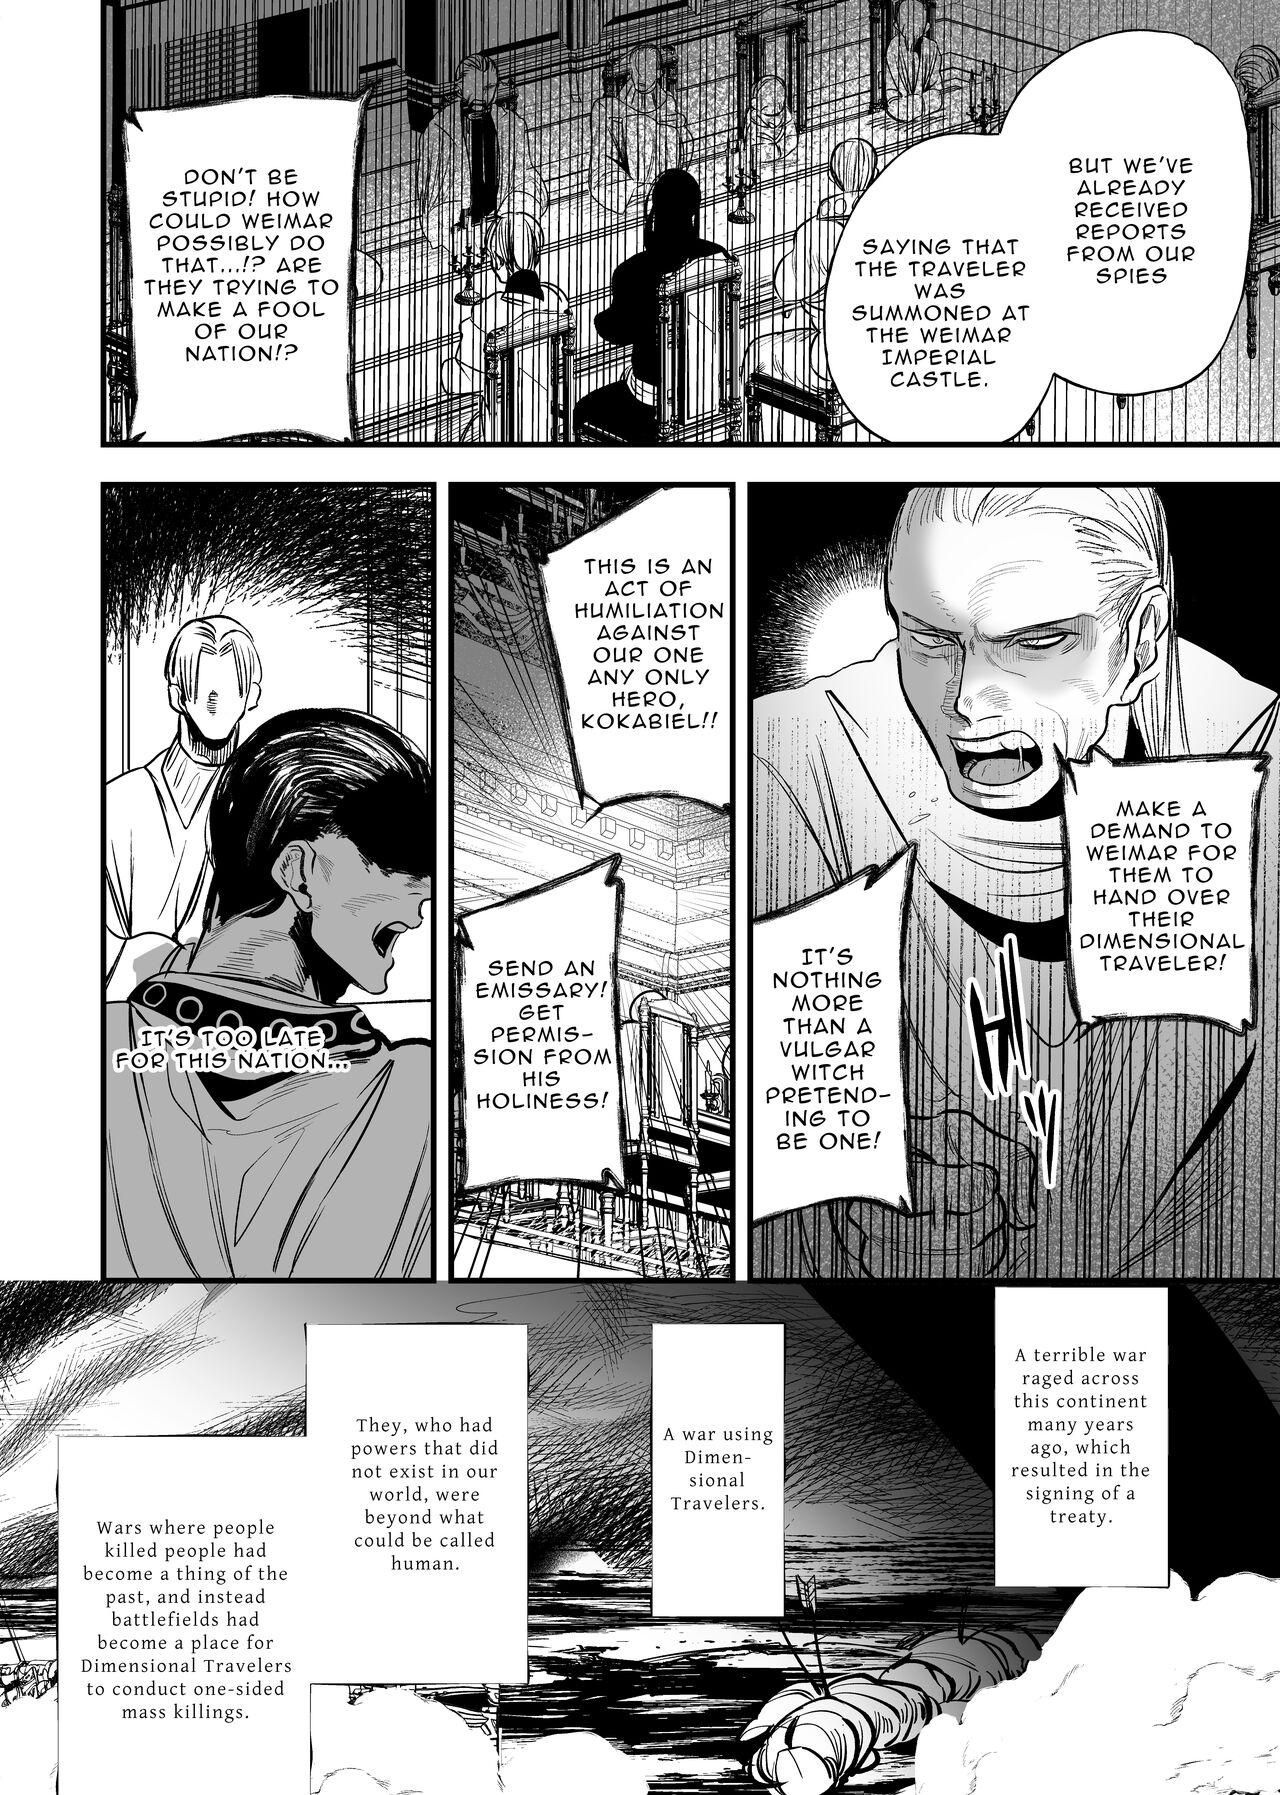 Nylon The Man Who Saved Me on my Isekai Trip was a Killer... 2 - Original Virgin - Page 6